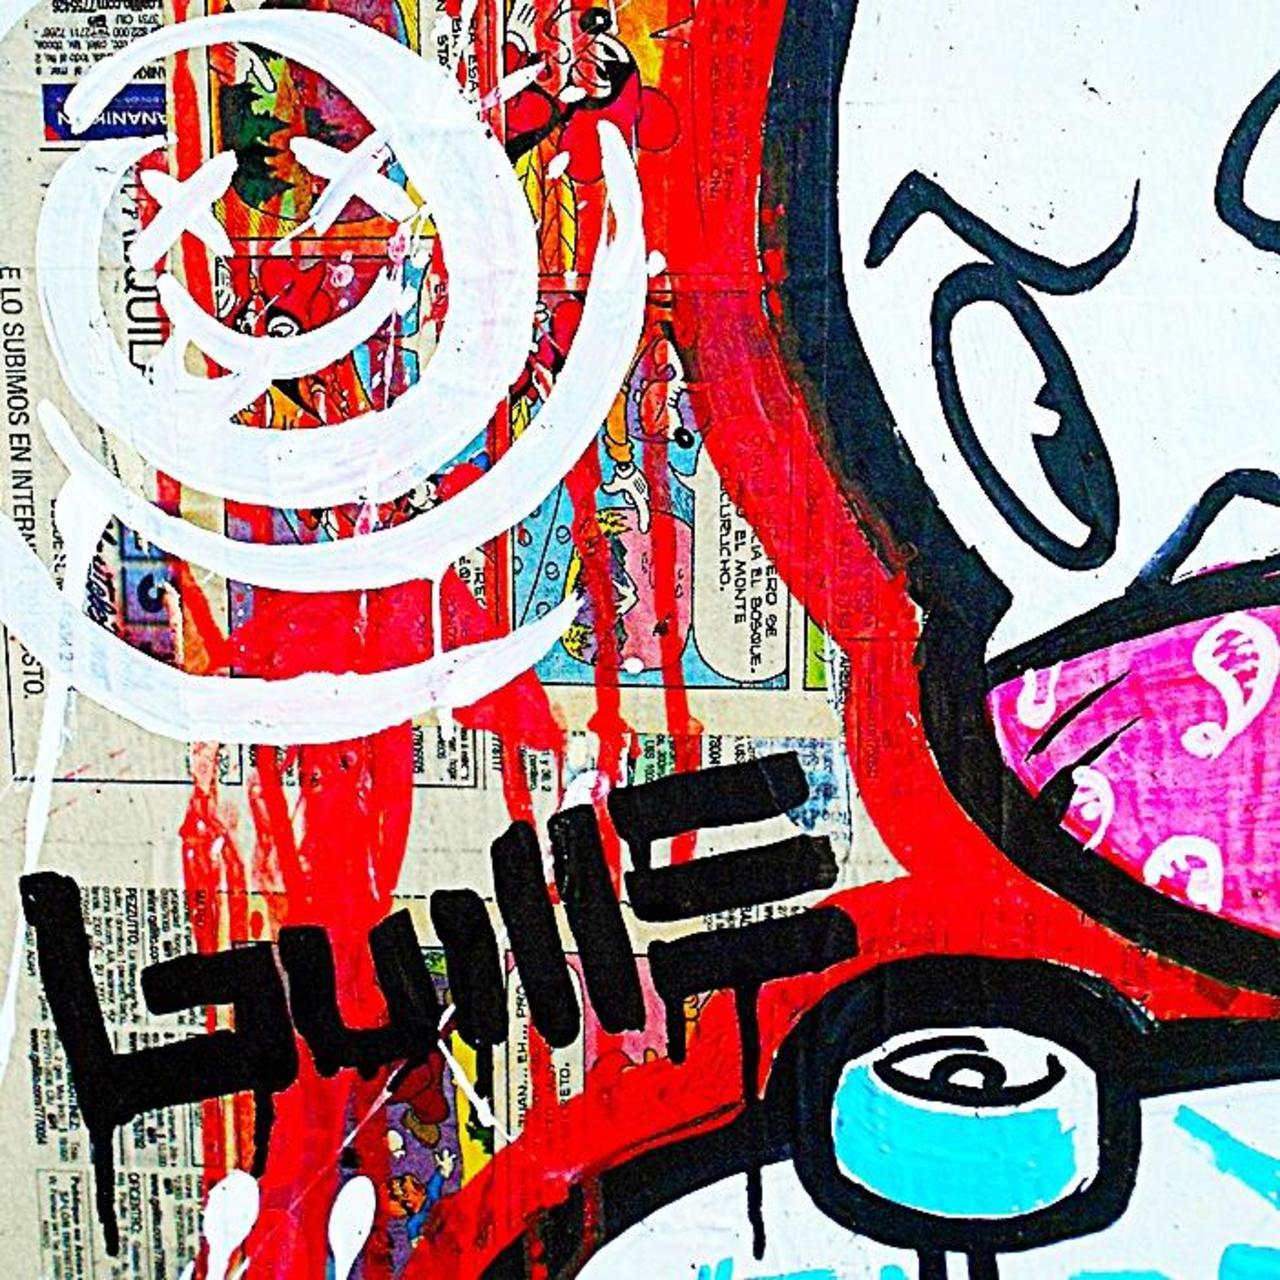 #Graffiti #Gasper #Skater
#Cool #Art #Uruguay #Artist  #popart #GuillermoVuljevas #streetArt #StreetArtEverywhere http://t.co/aRljE9kexx